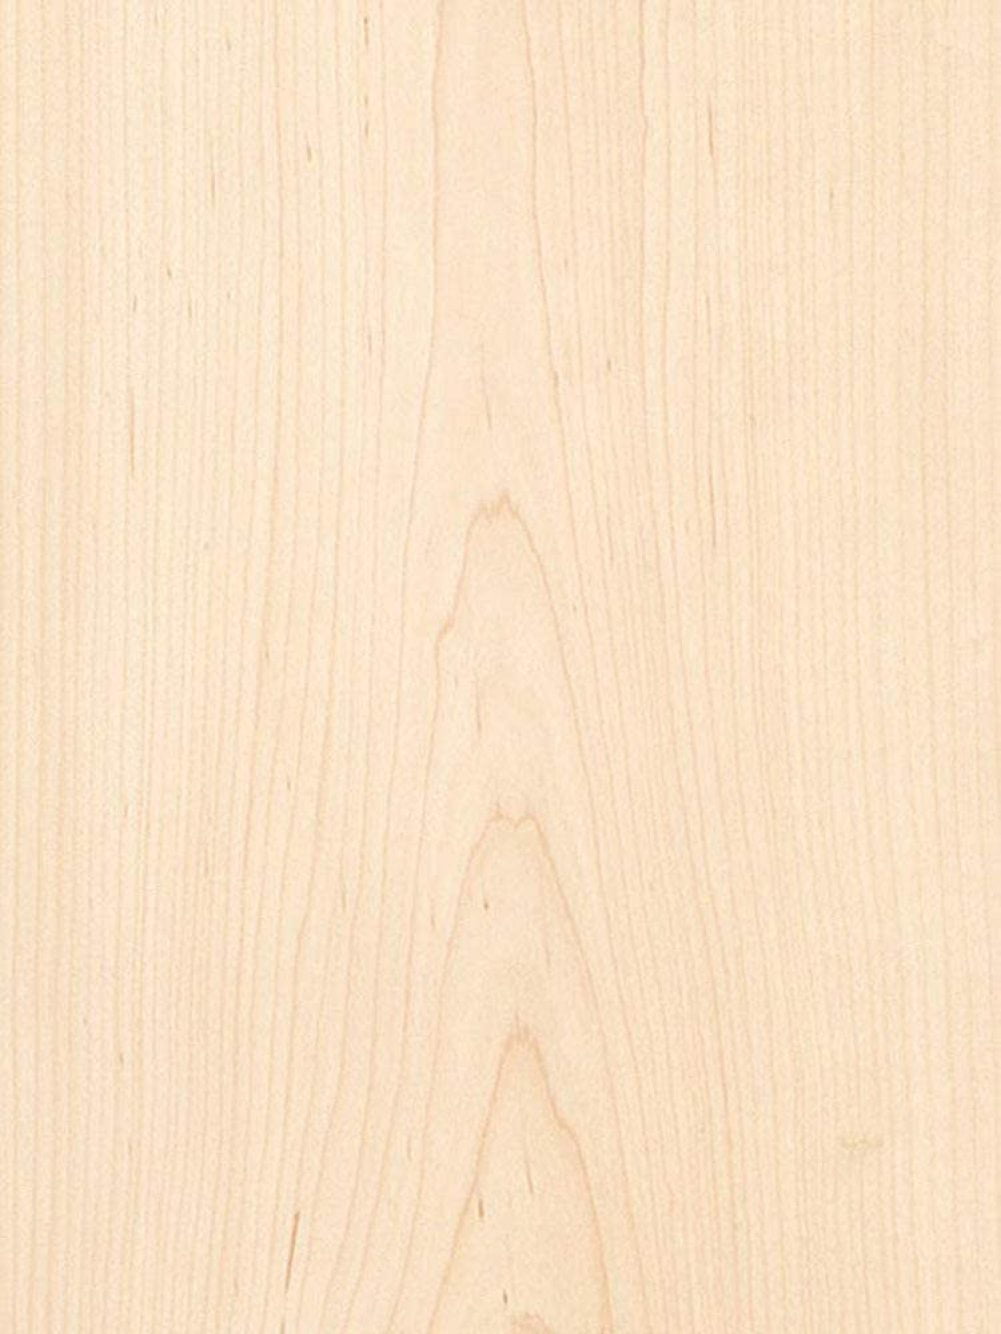 White Maple Veneer Plain Sliced Wood on Wood Backer Backing 4' X 8' 48" x 96" 